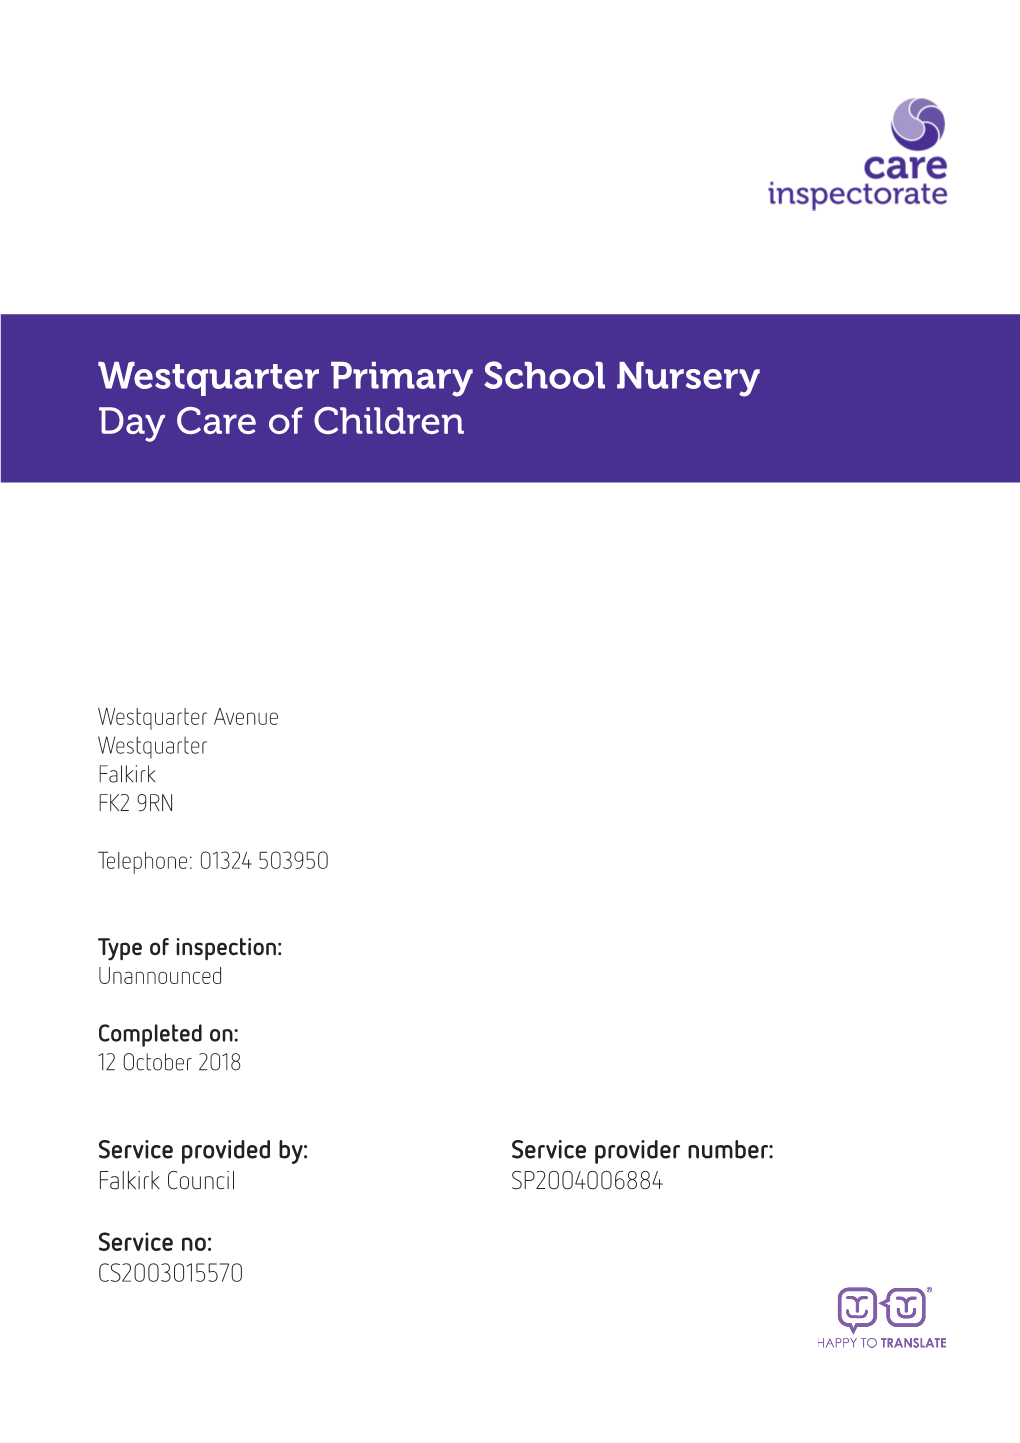 Westquarter Primary School Nursery Day Care of Children